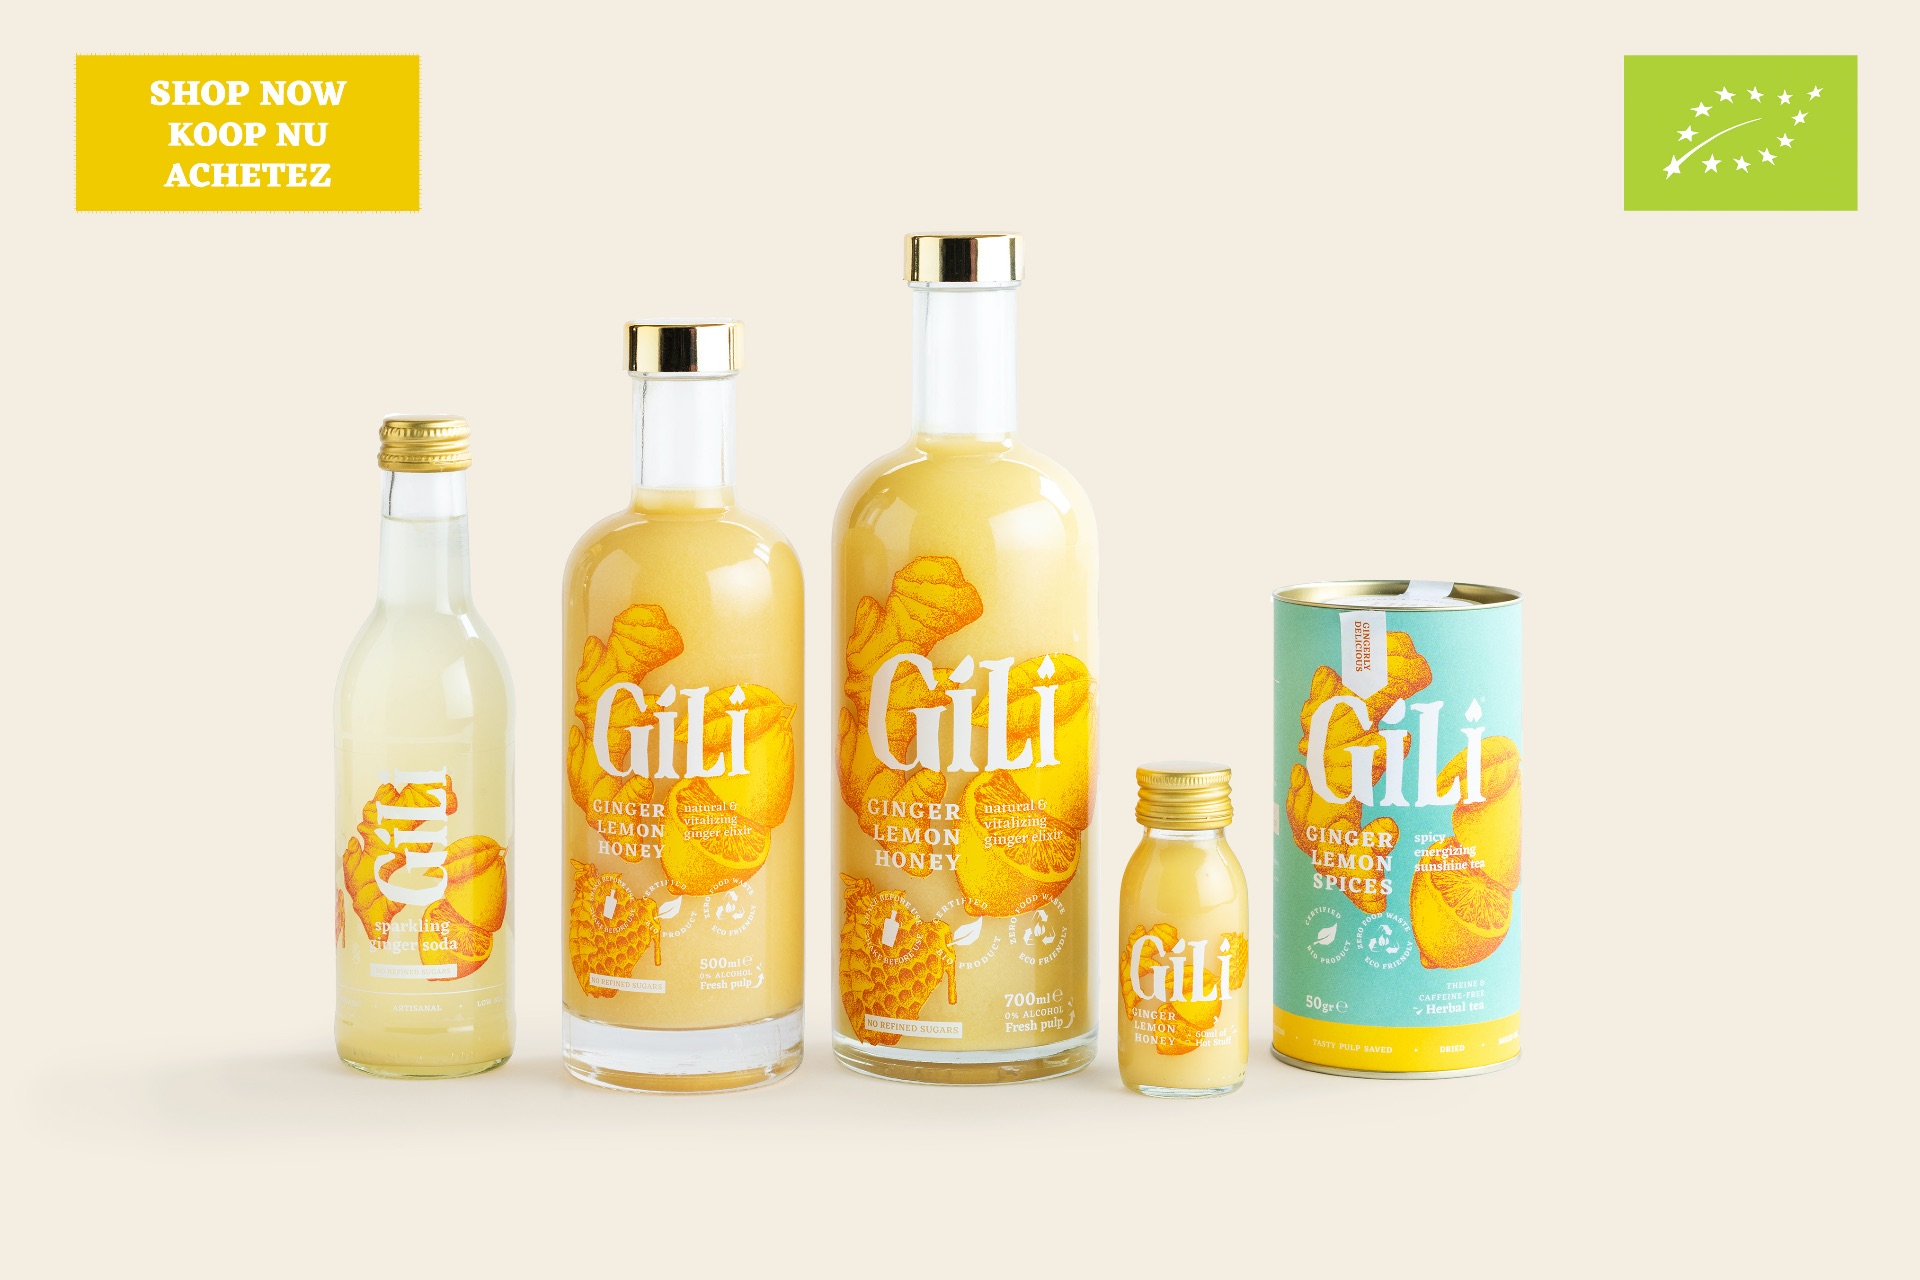 Gili Product Assortment: Ginger Soda, Elixir, Shot, Tea